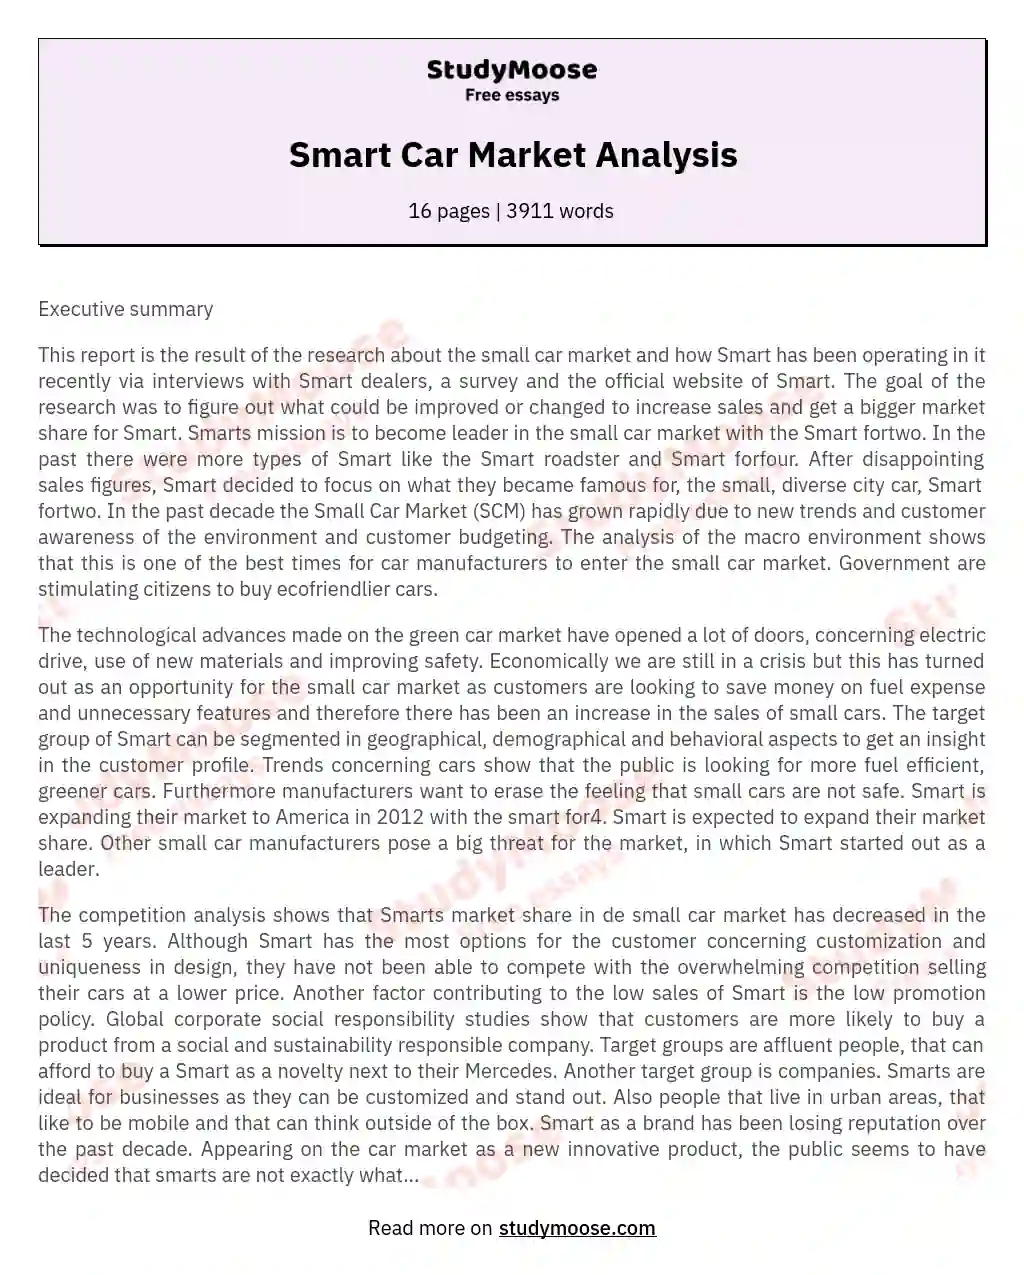 Smart Car Market Analysis essay